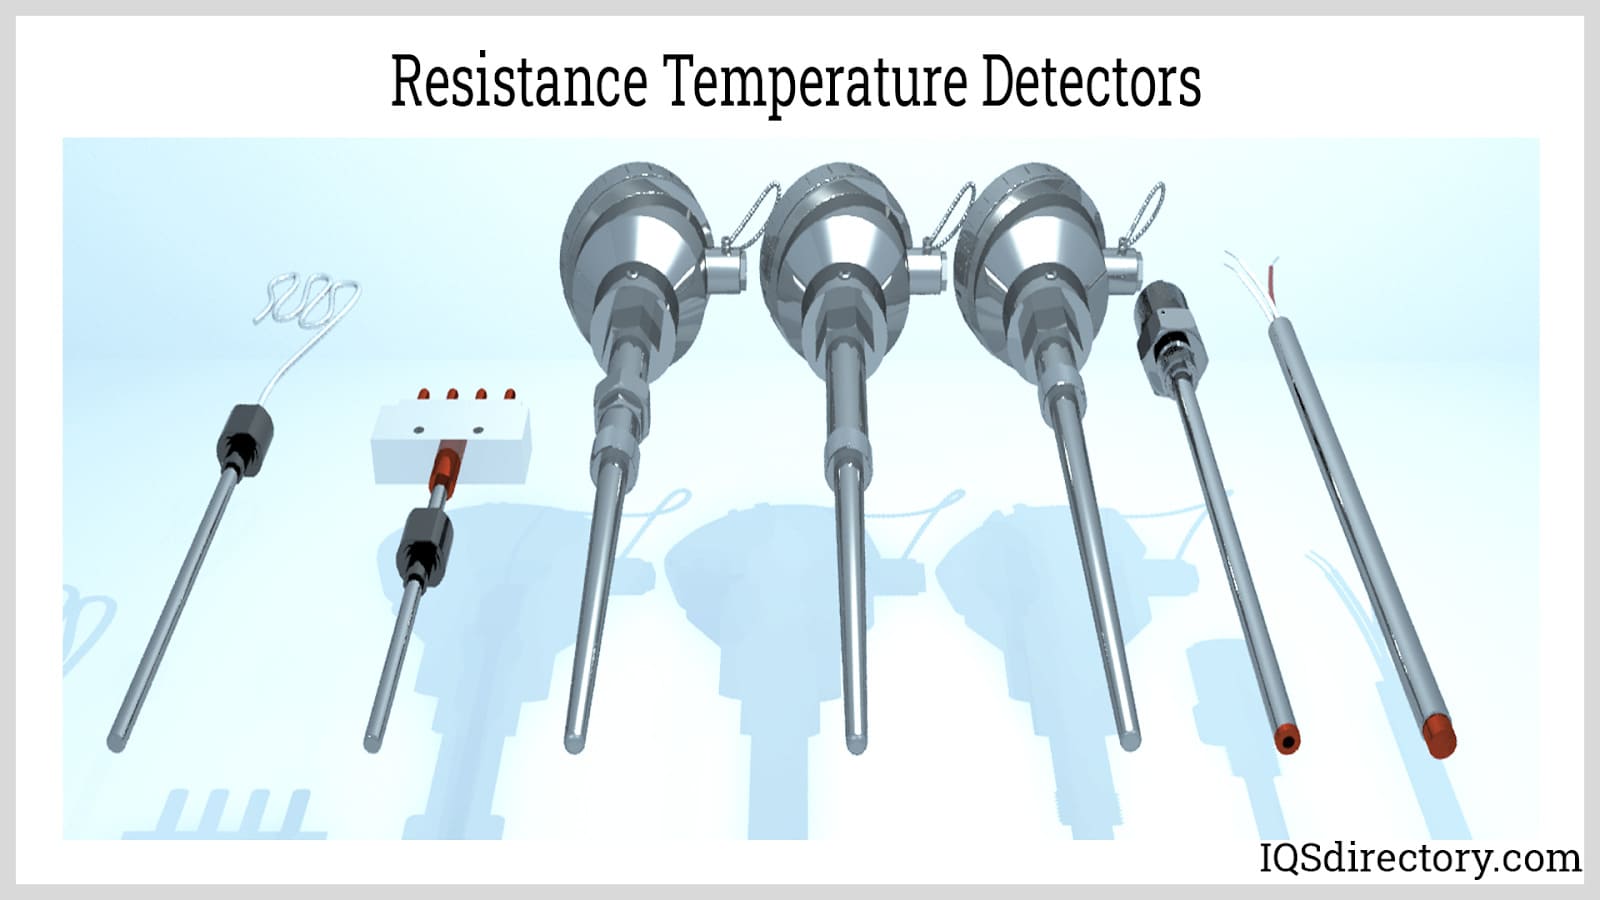 https://www.iqsdirectory.com/articles/thermocouple/rtd-sensors/resistance-temperature-detectors-2.jpg